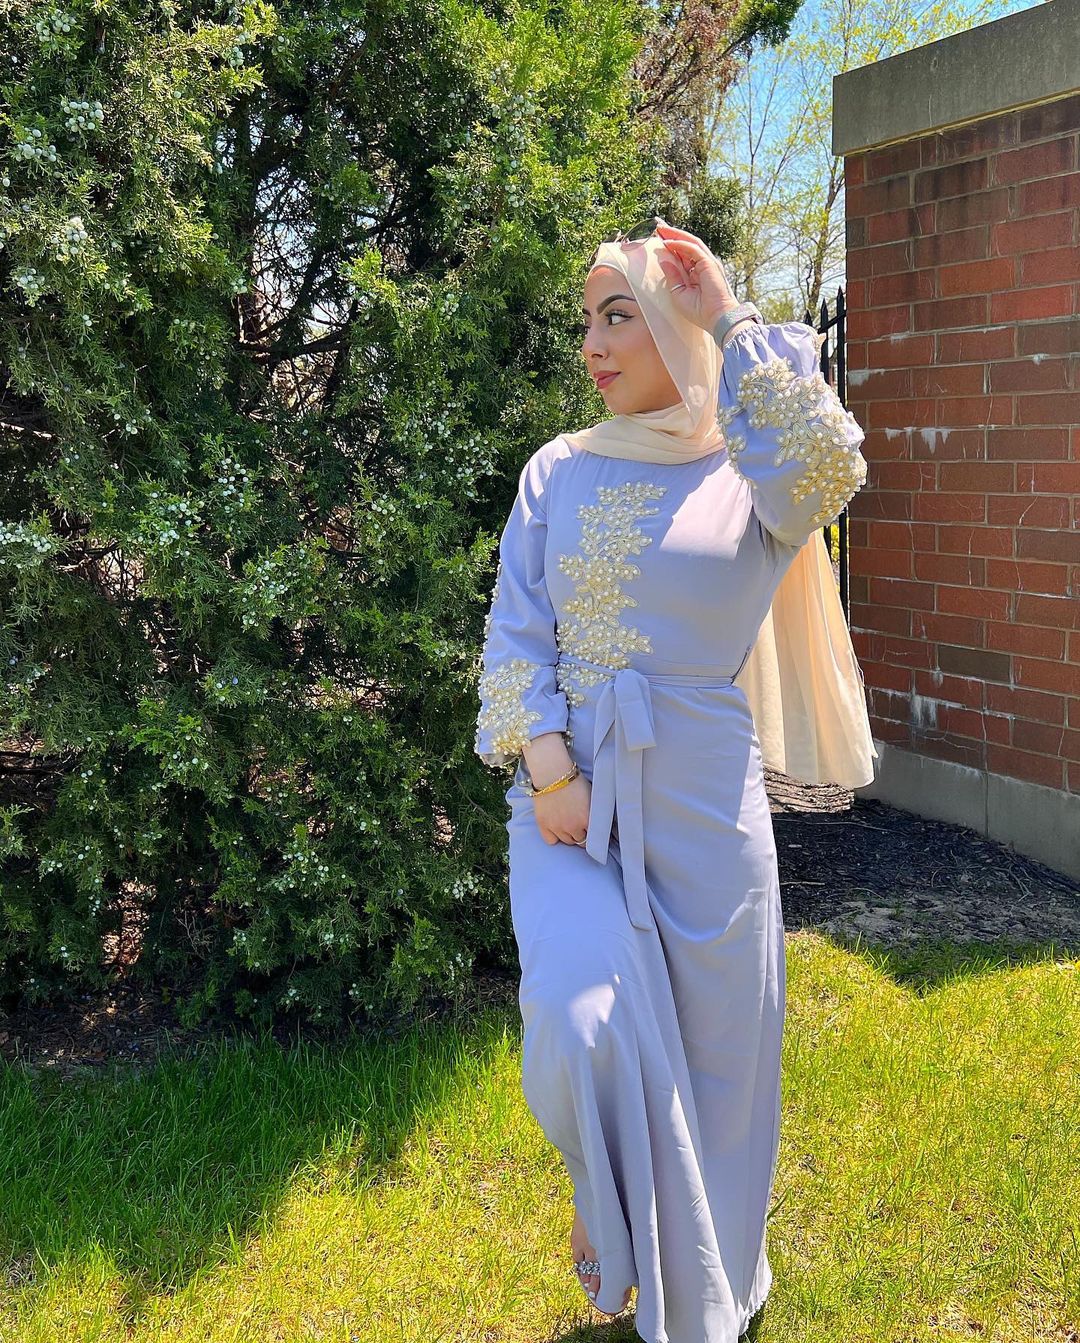 New Hijabi Girl DP